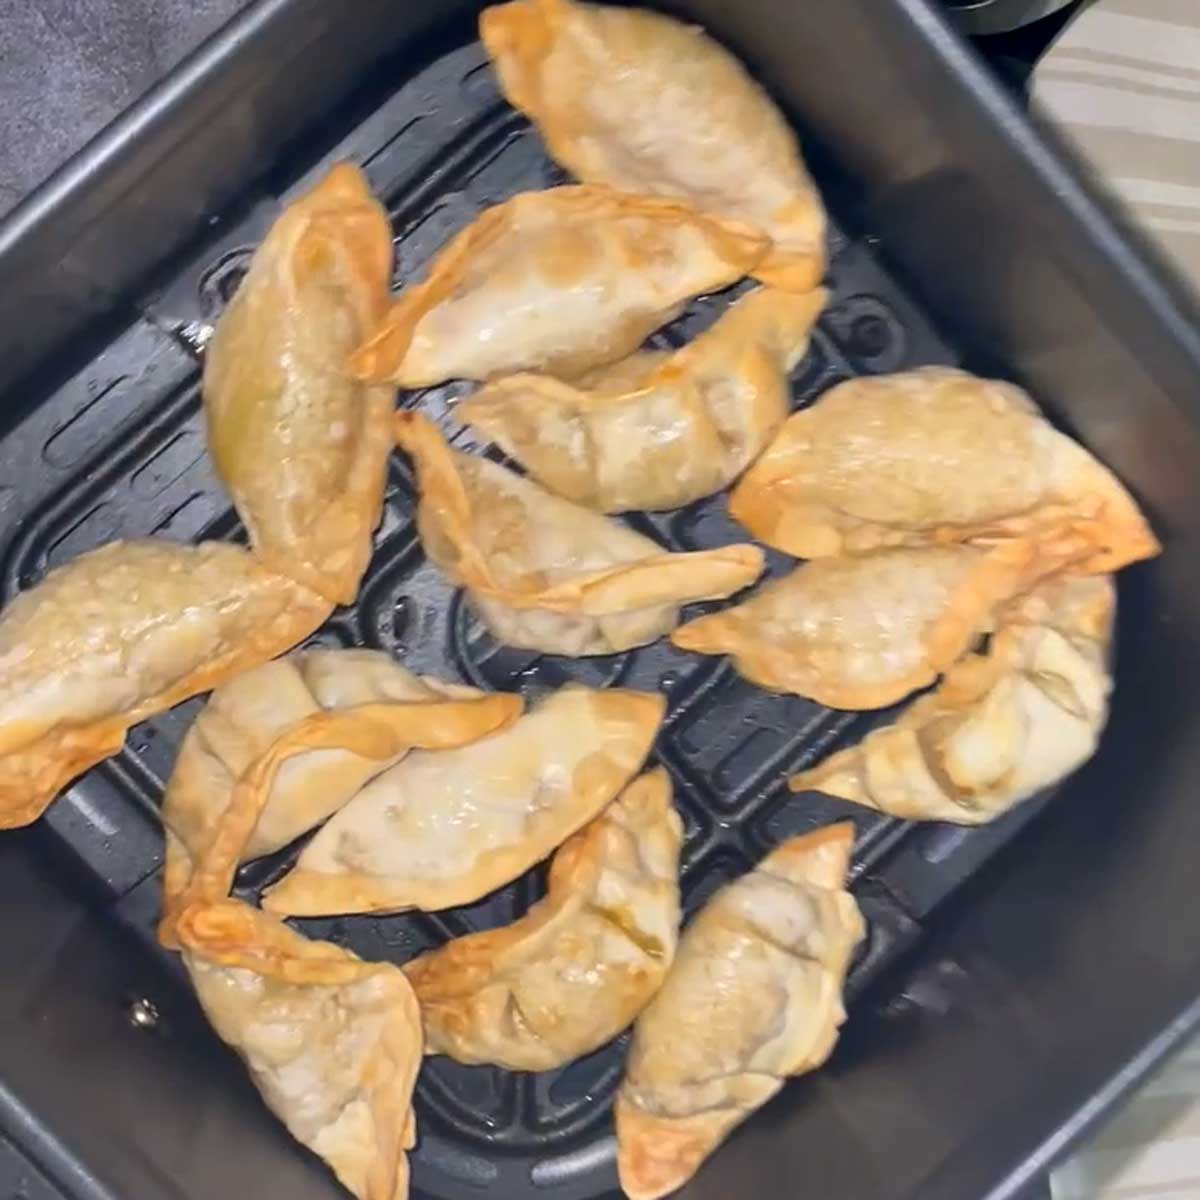 Potstickers baked in air fryer.